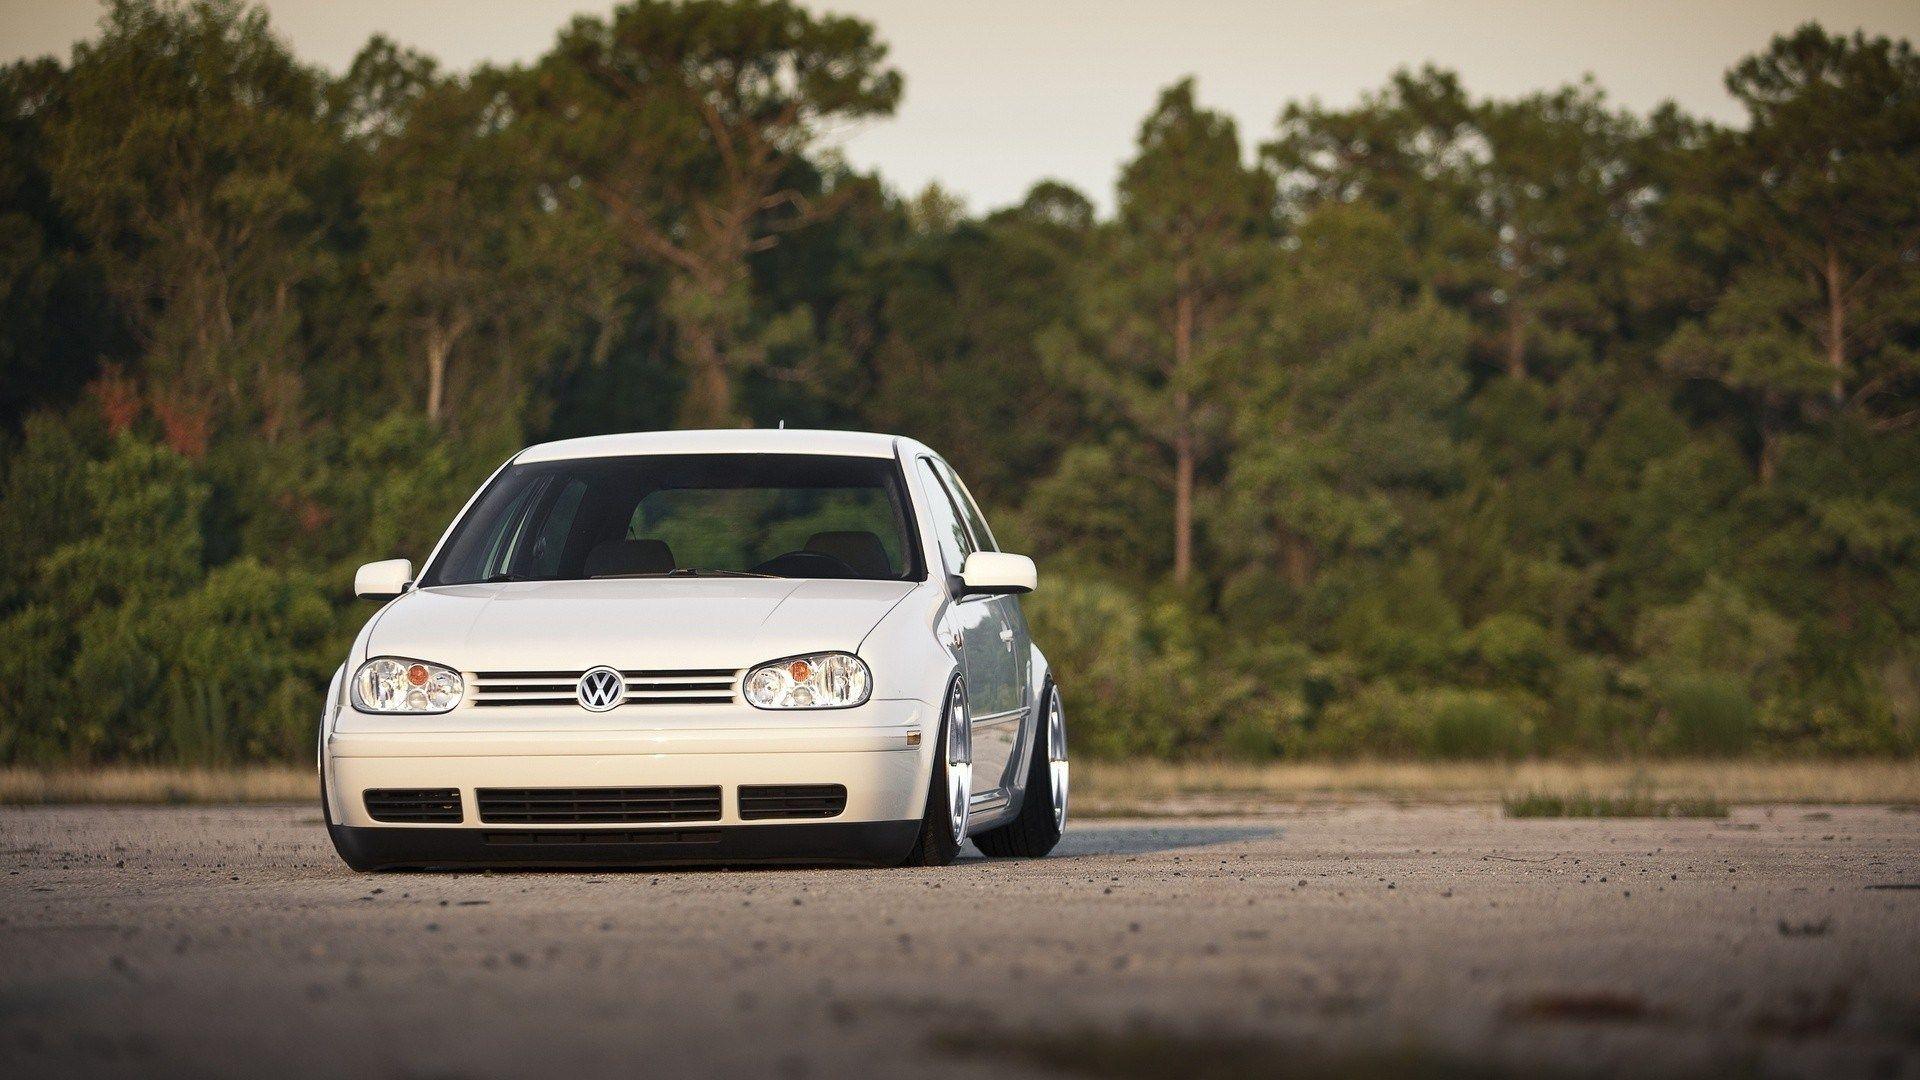 Volkswagen Golf Wallpaper High Quality